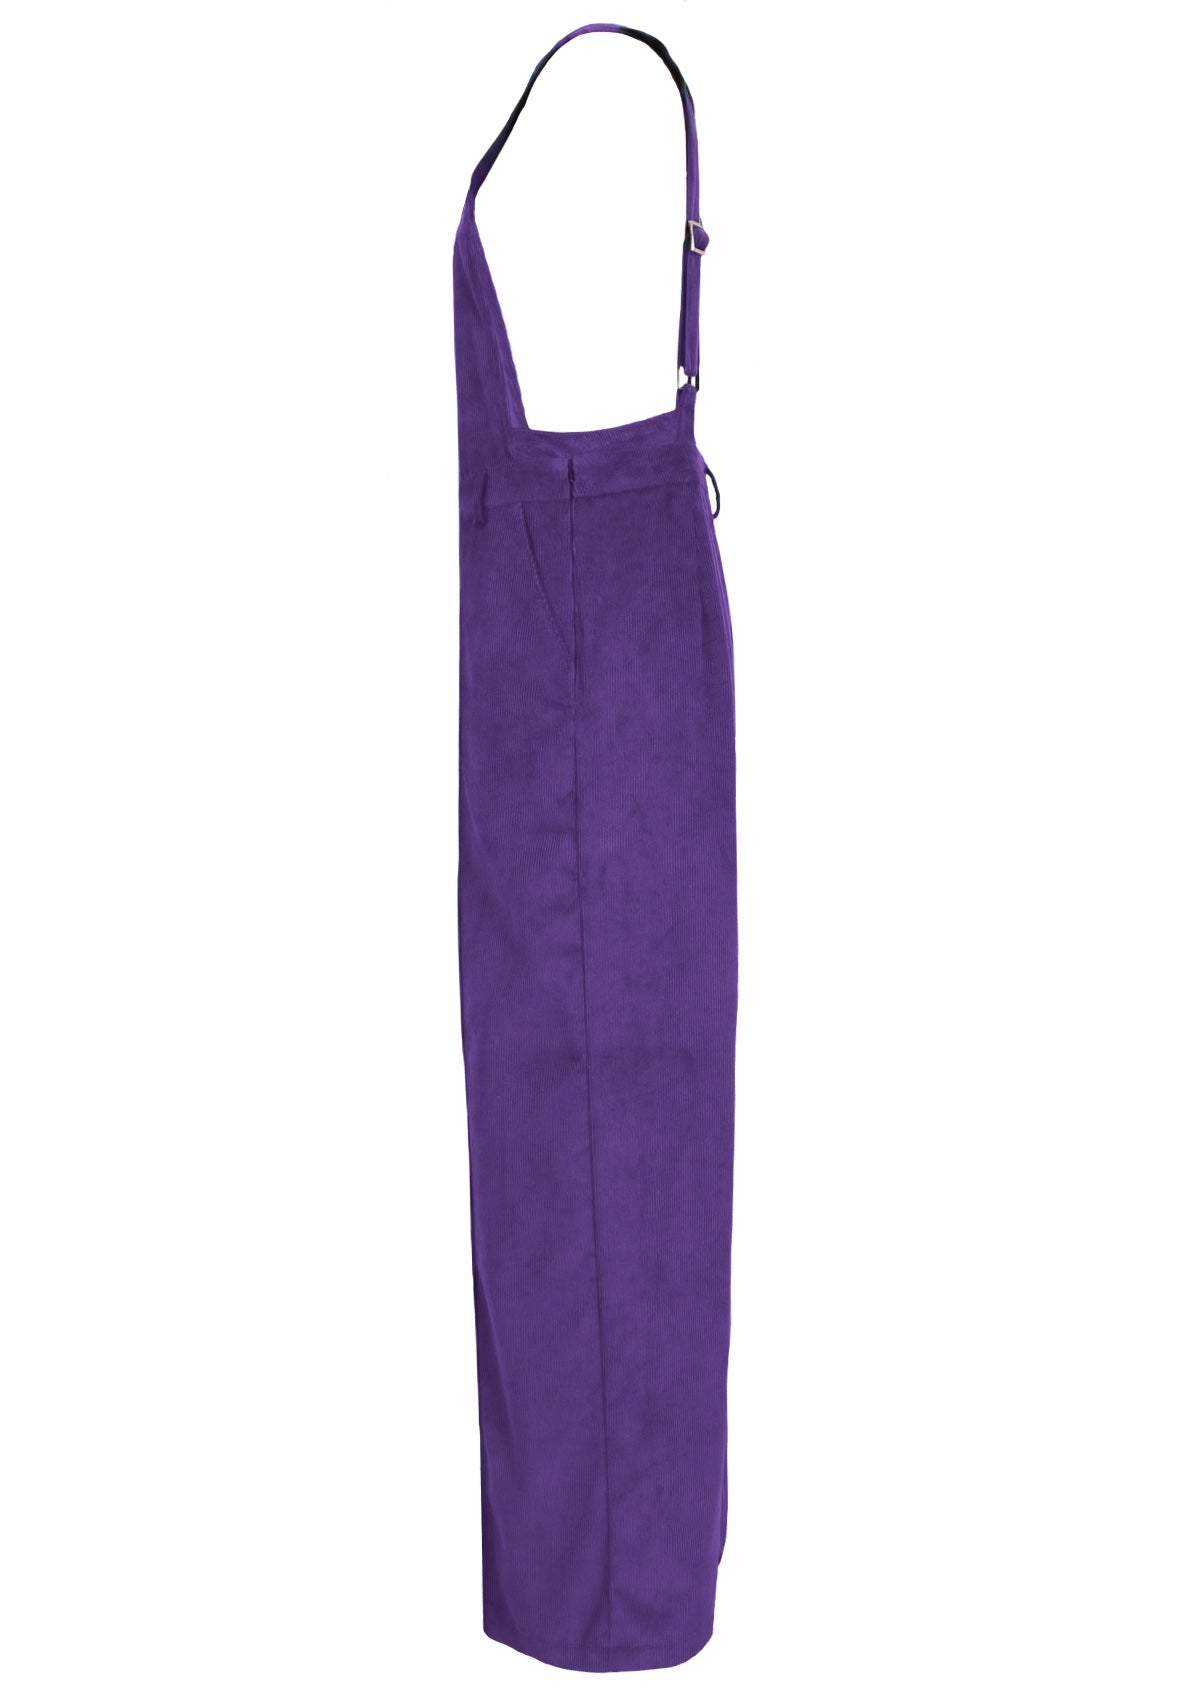 side view purple corduroy overalls